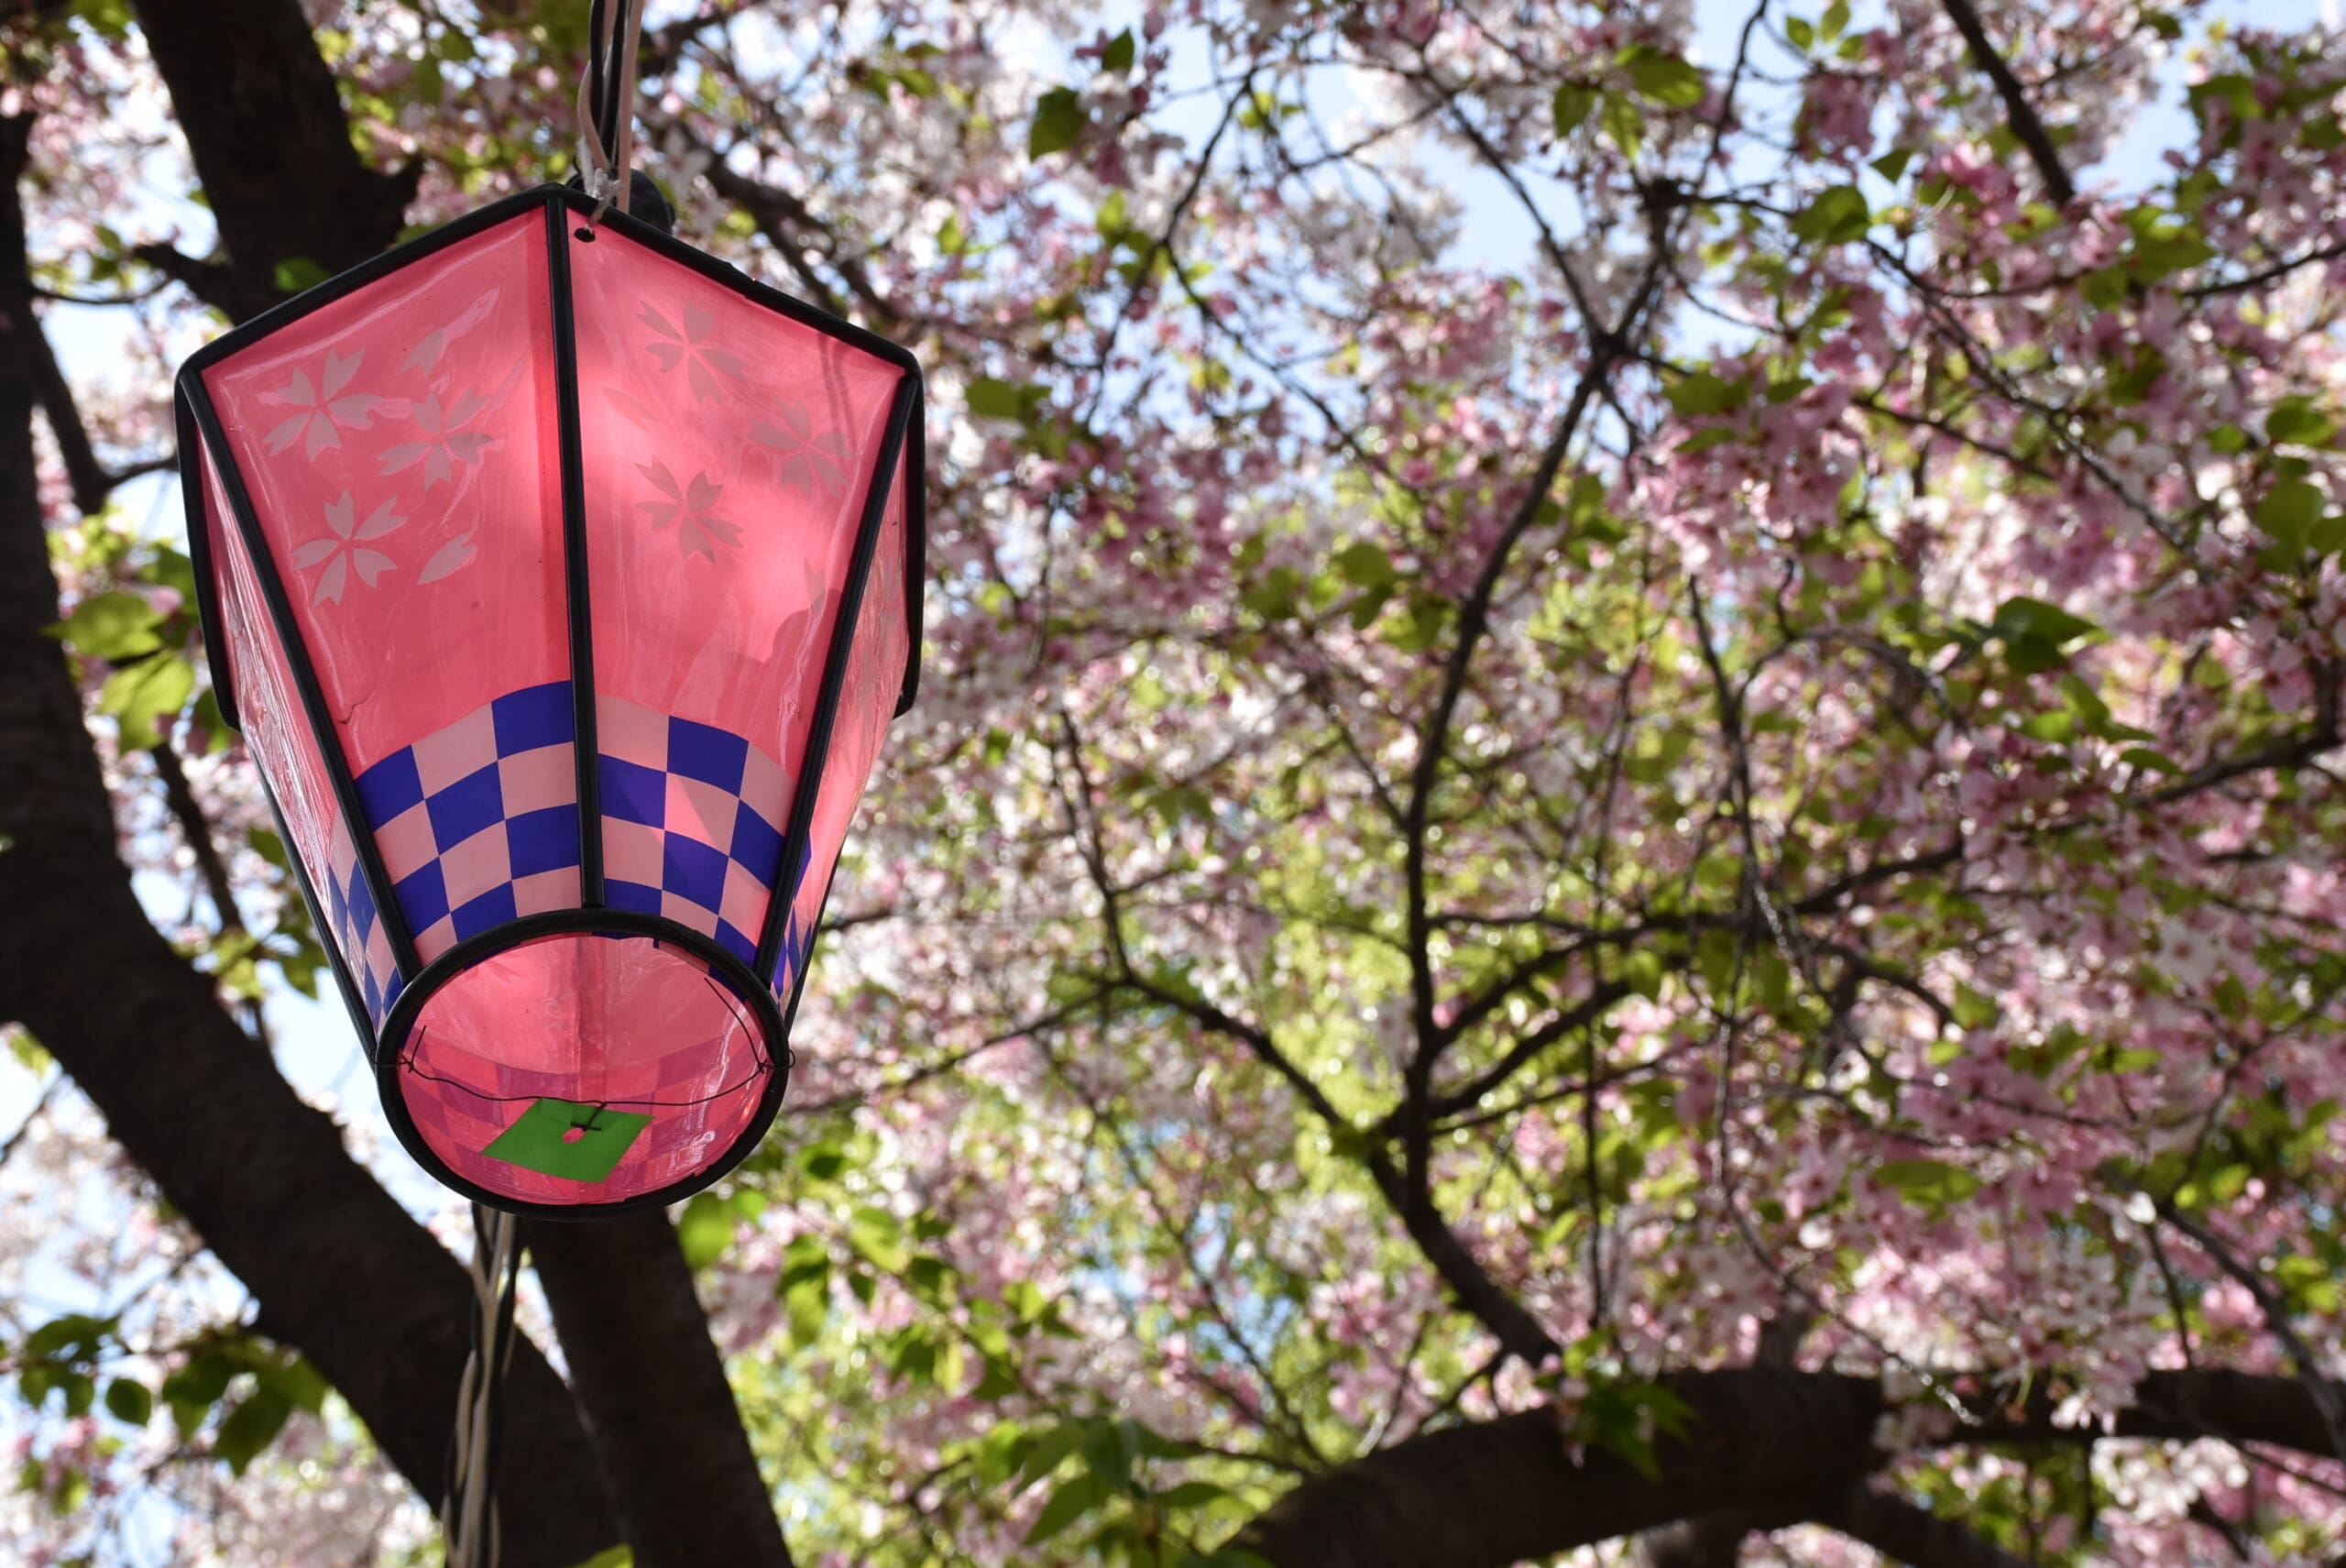 Hanami Japanese Tradition of Appreciating Cherry Blossom